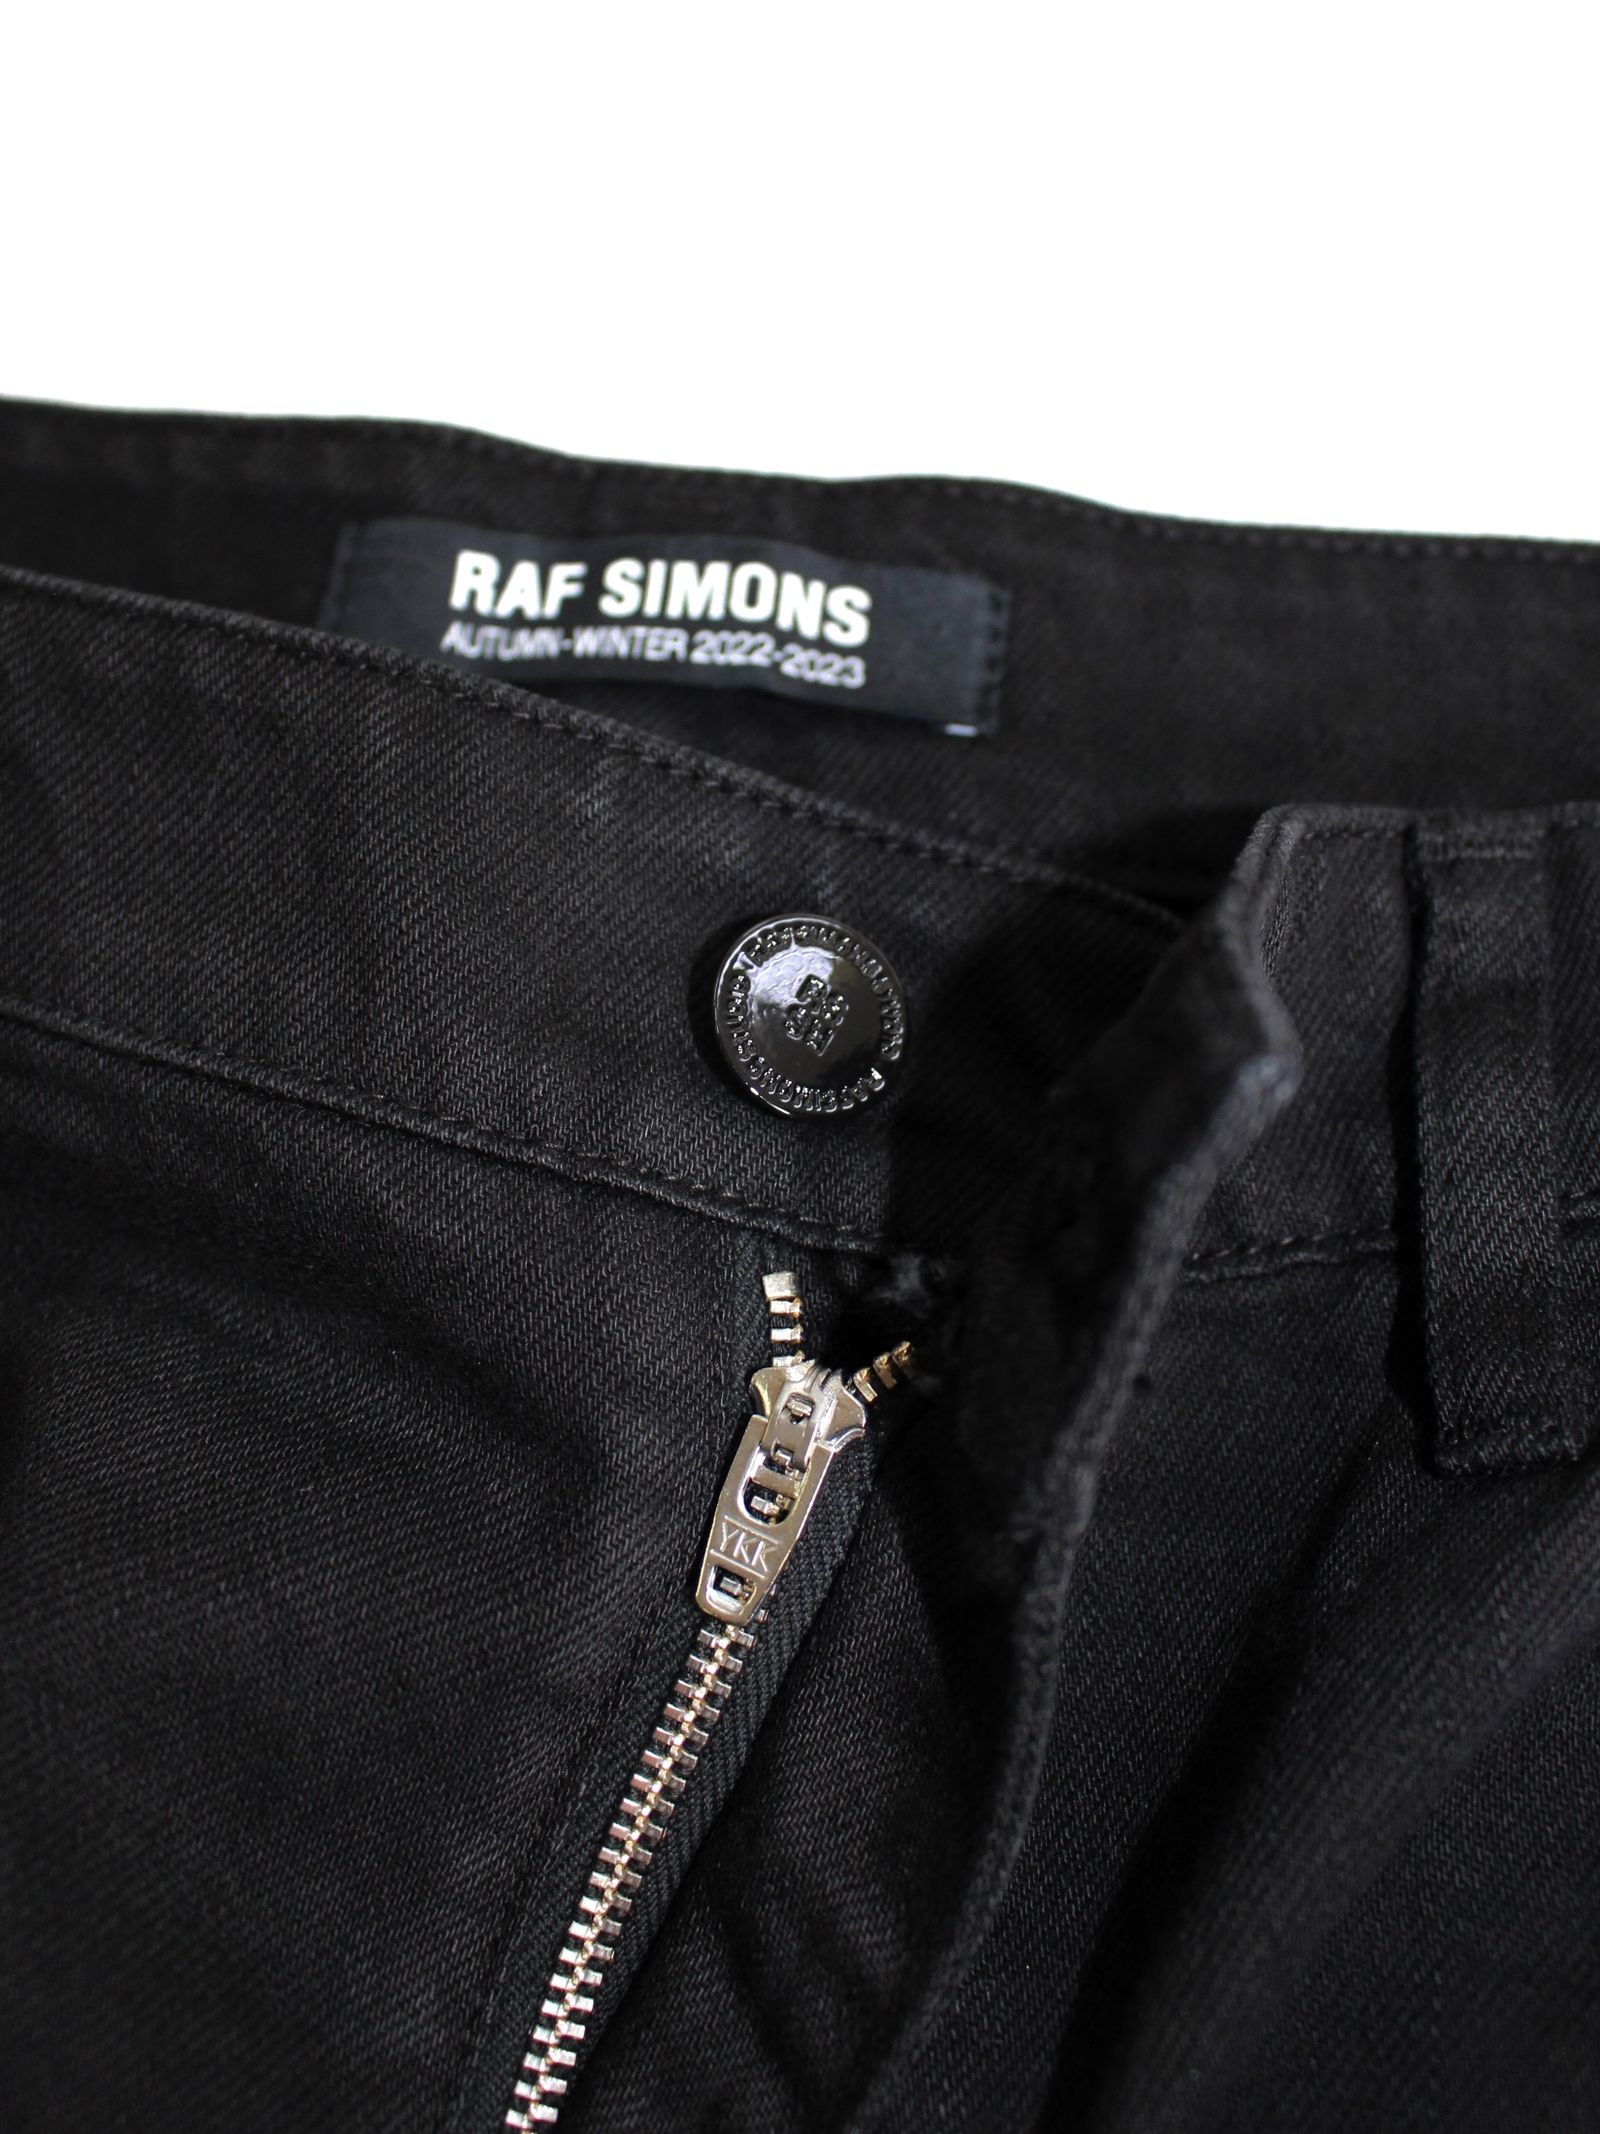 RAF SIMONS - 【22AW】スリムフィット デニム パンツ / SLIM FIT DENIM 